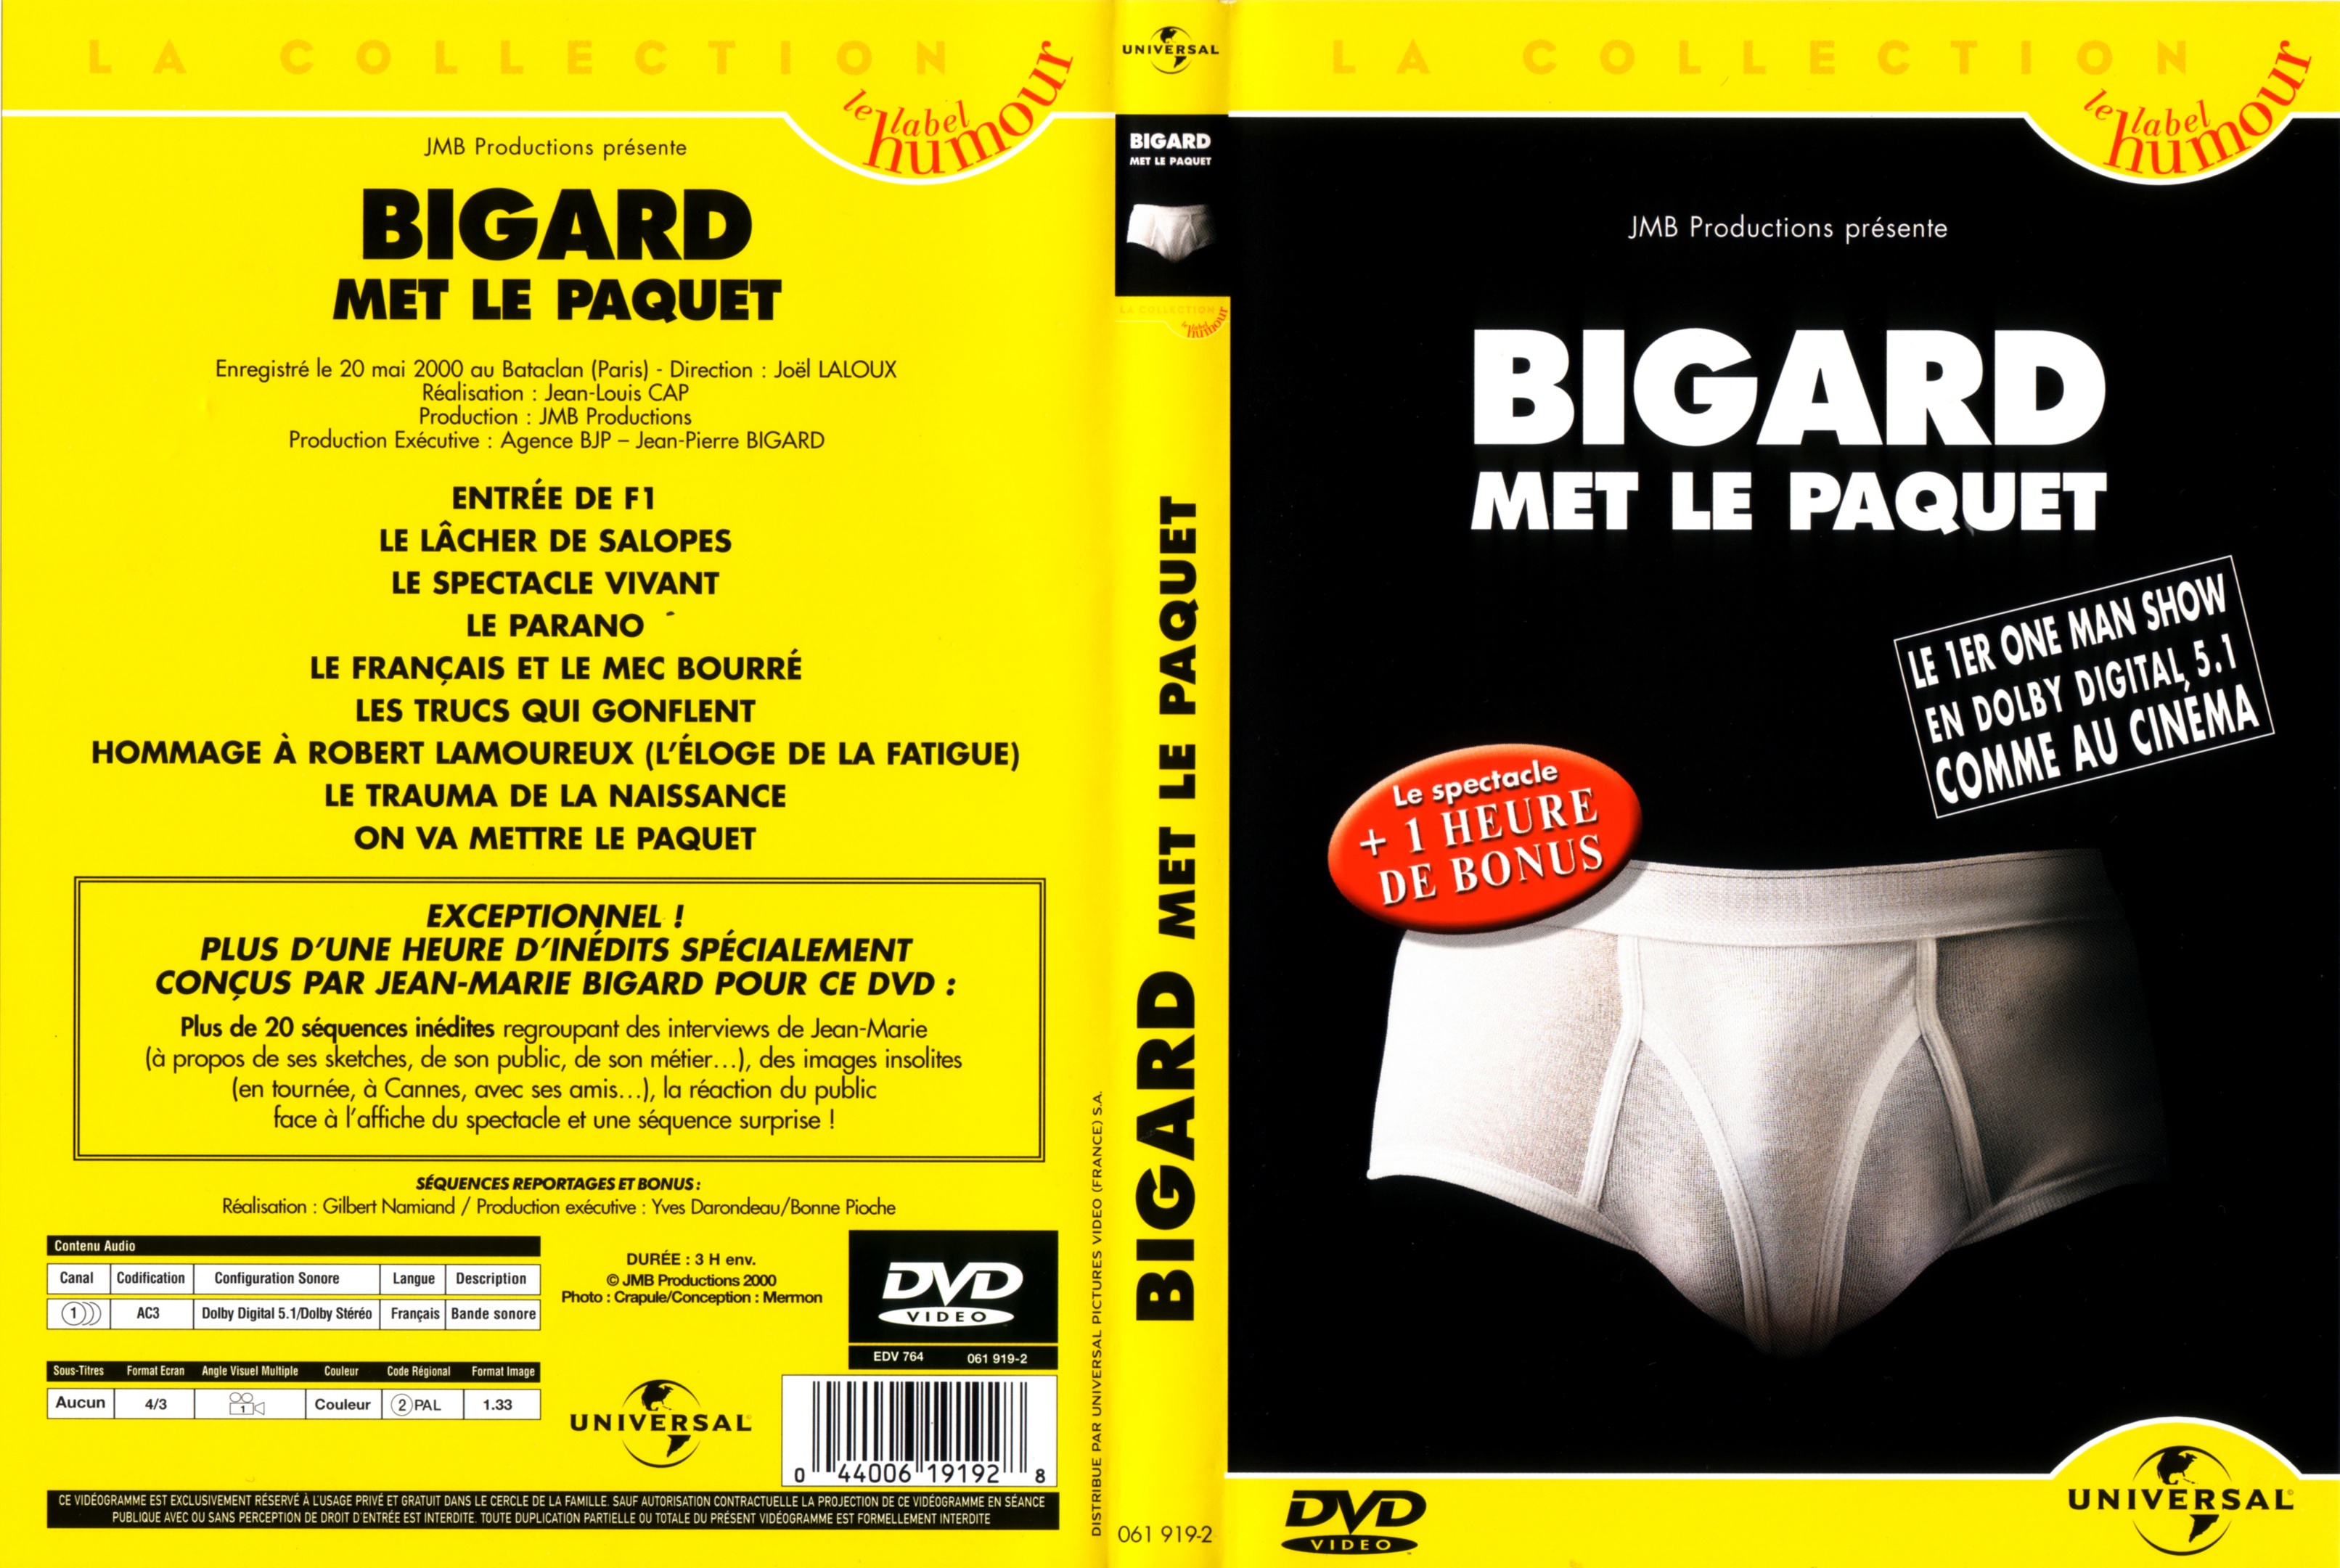 Jaquette DVD Bigard met le paquet